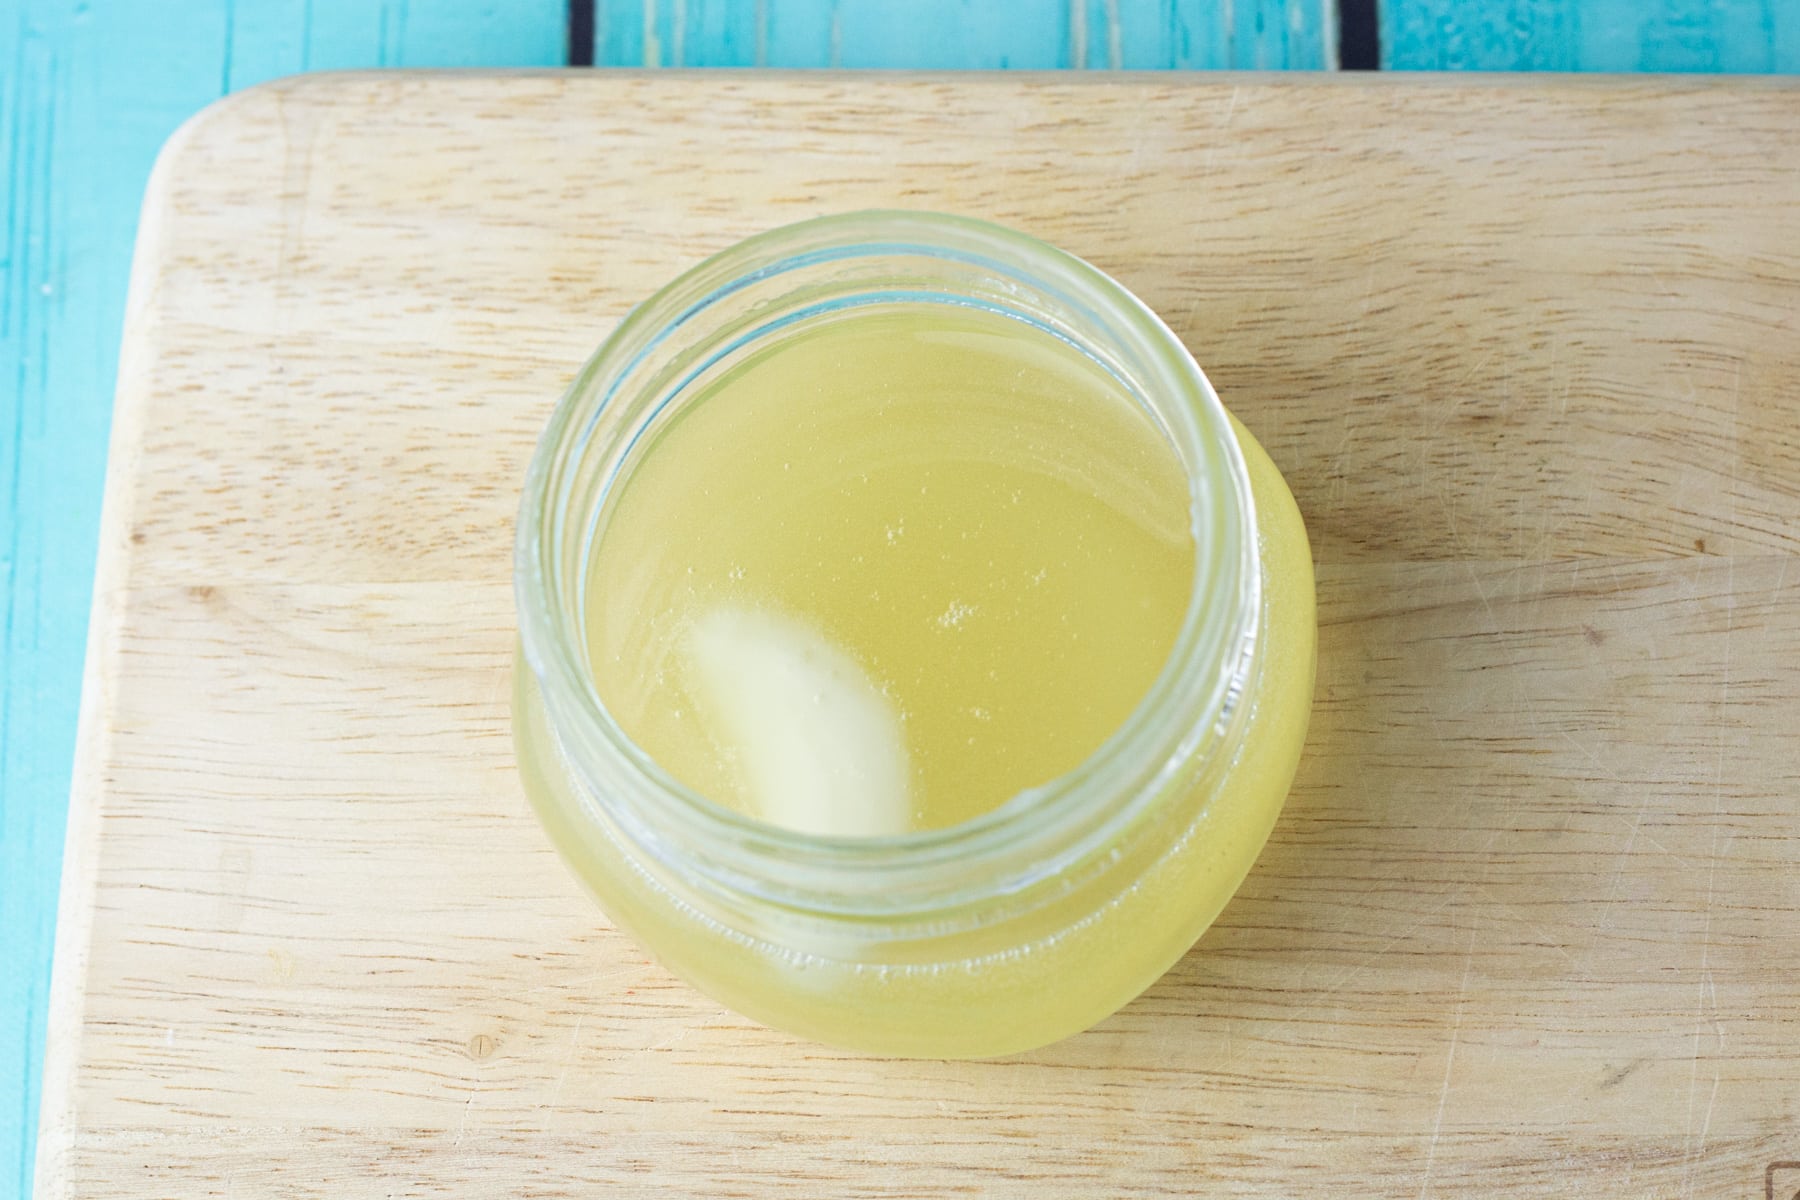 liquid body butter in glass jar.